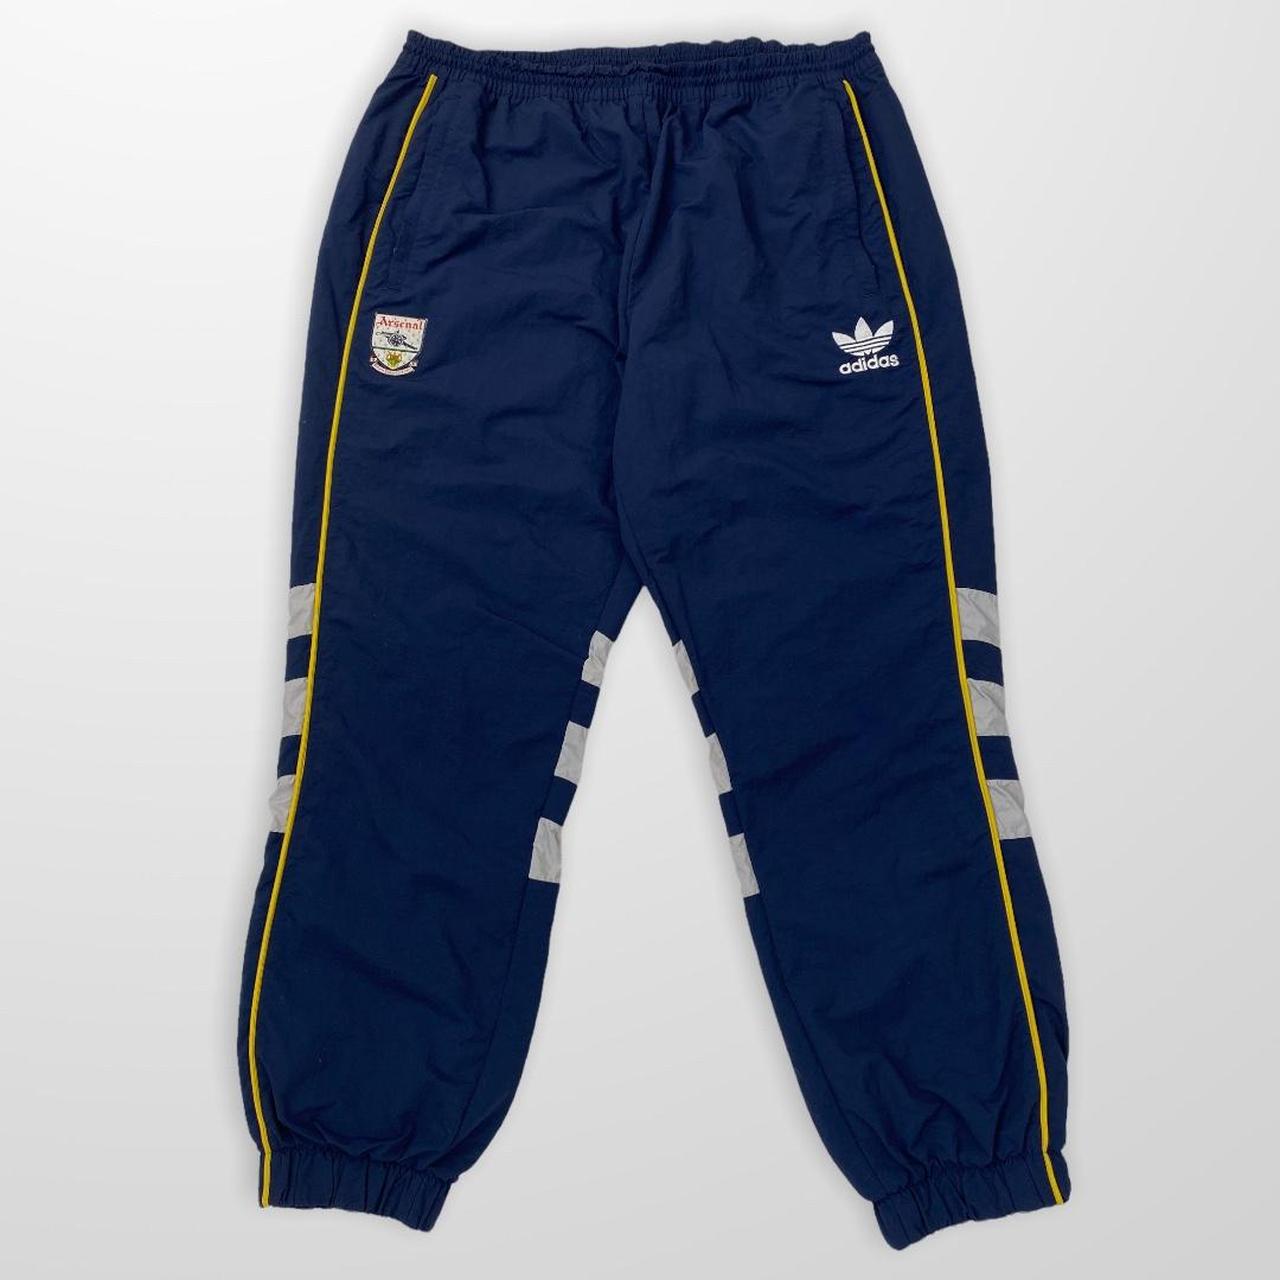 Adidas Originals Arsenal Track Pants In Navy & Red... - Depop